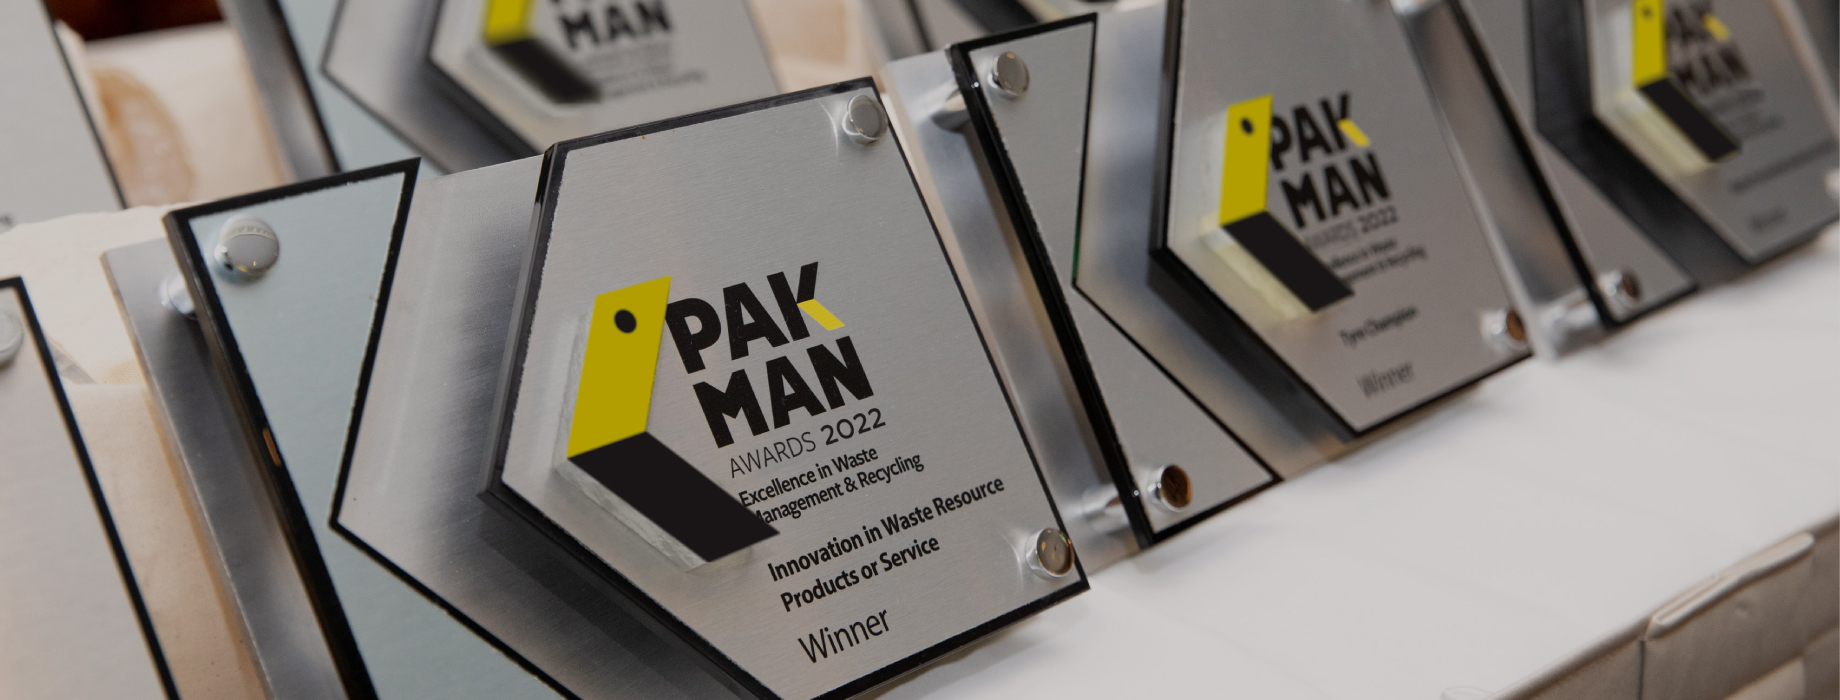  2023 Pakman Awards entries closed